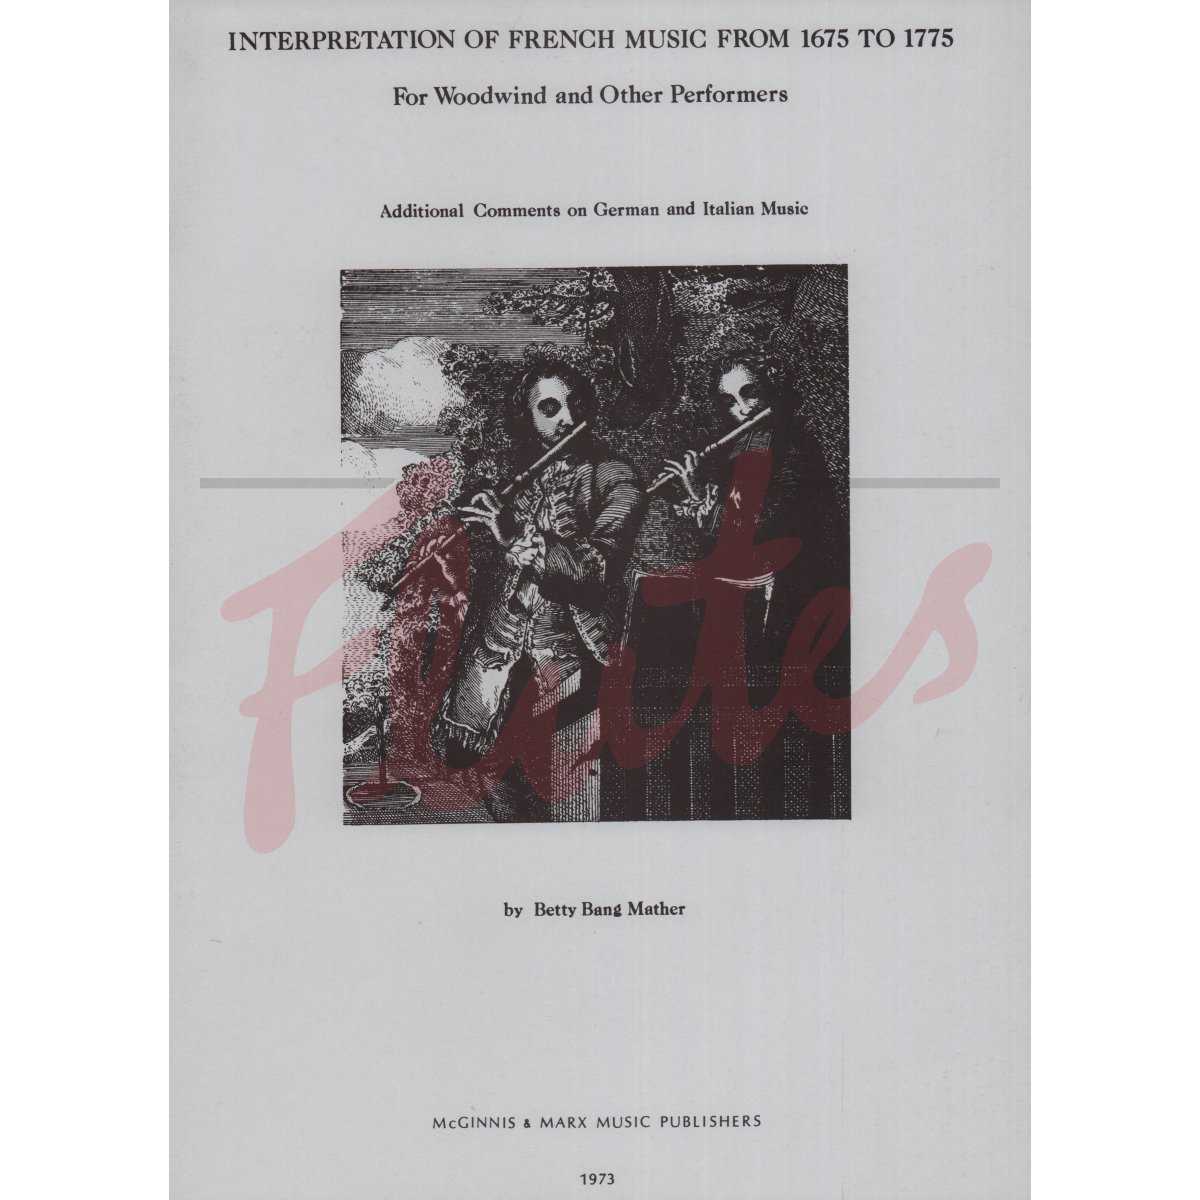 Interpretation of French Music 1675-1775